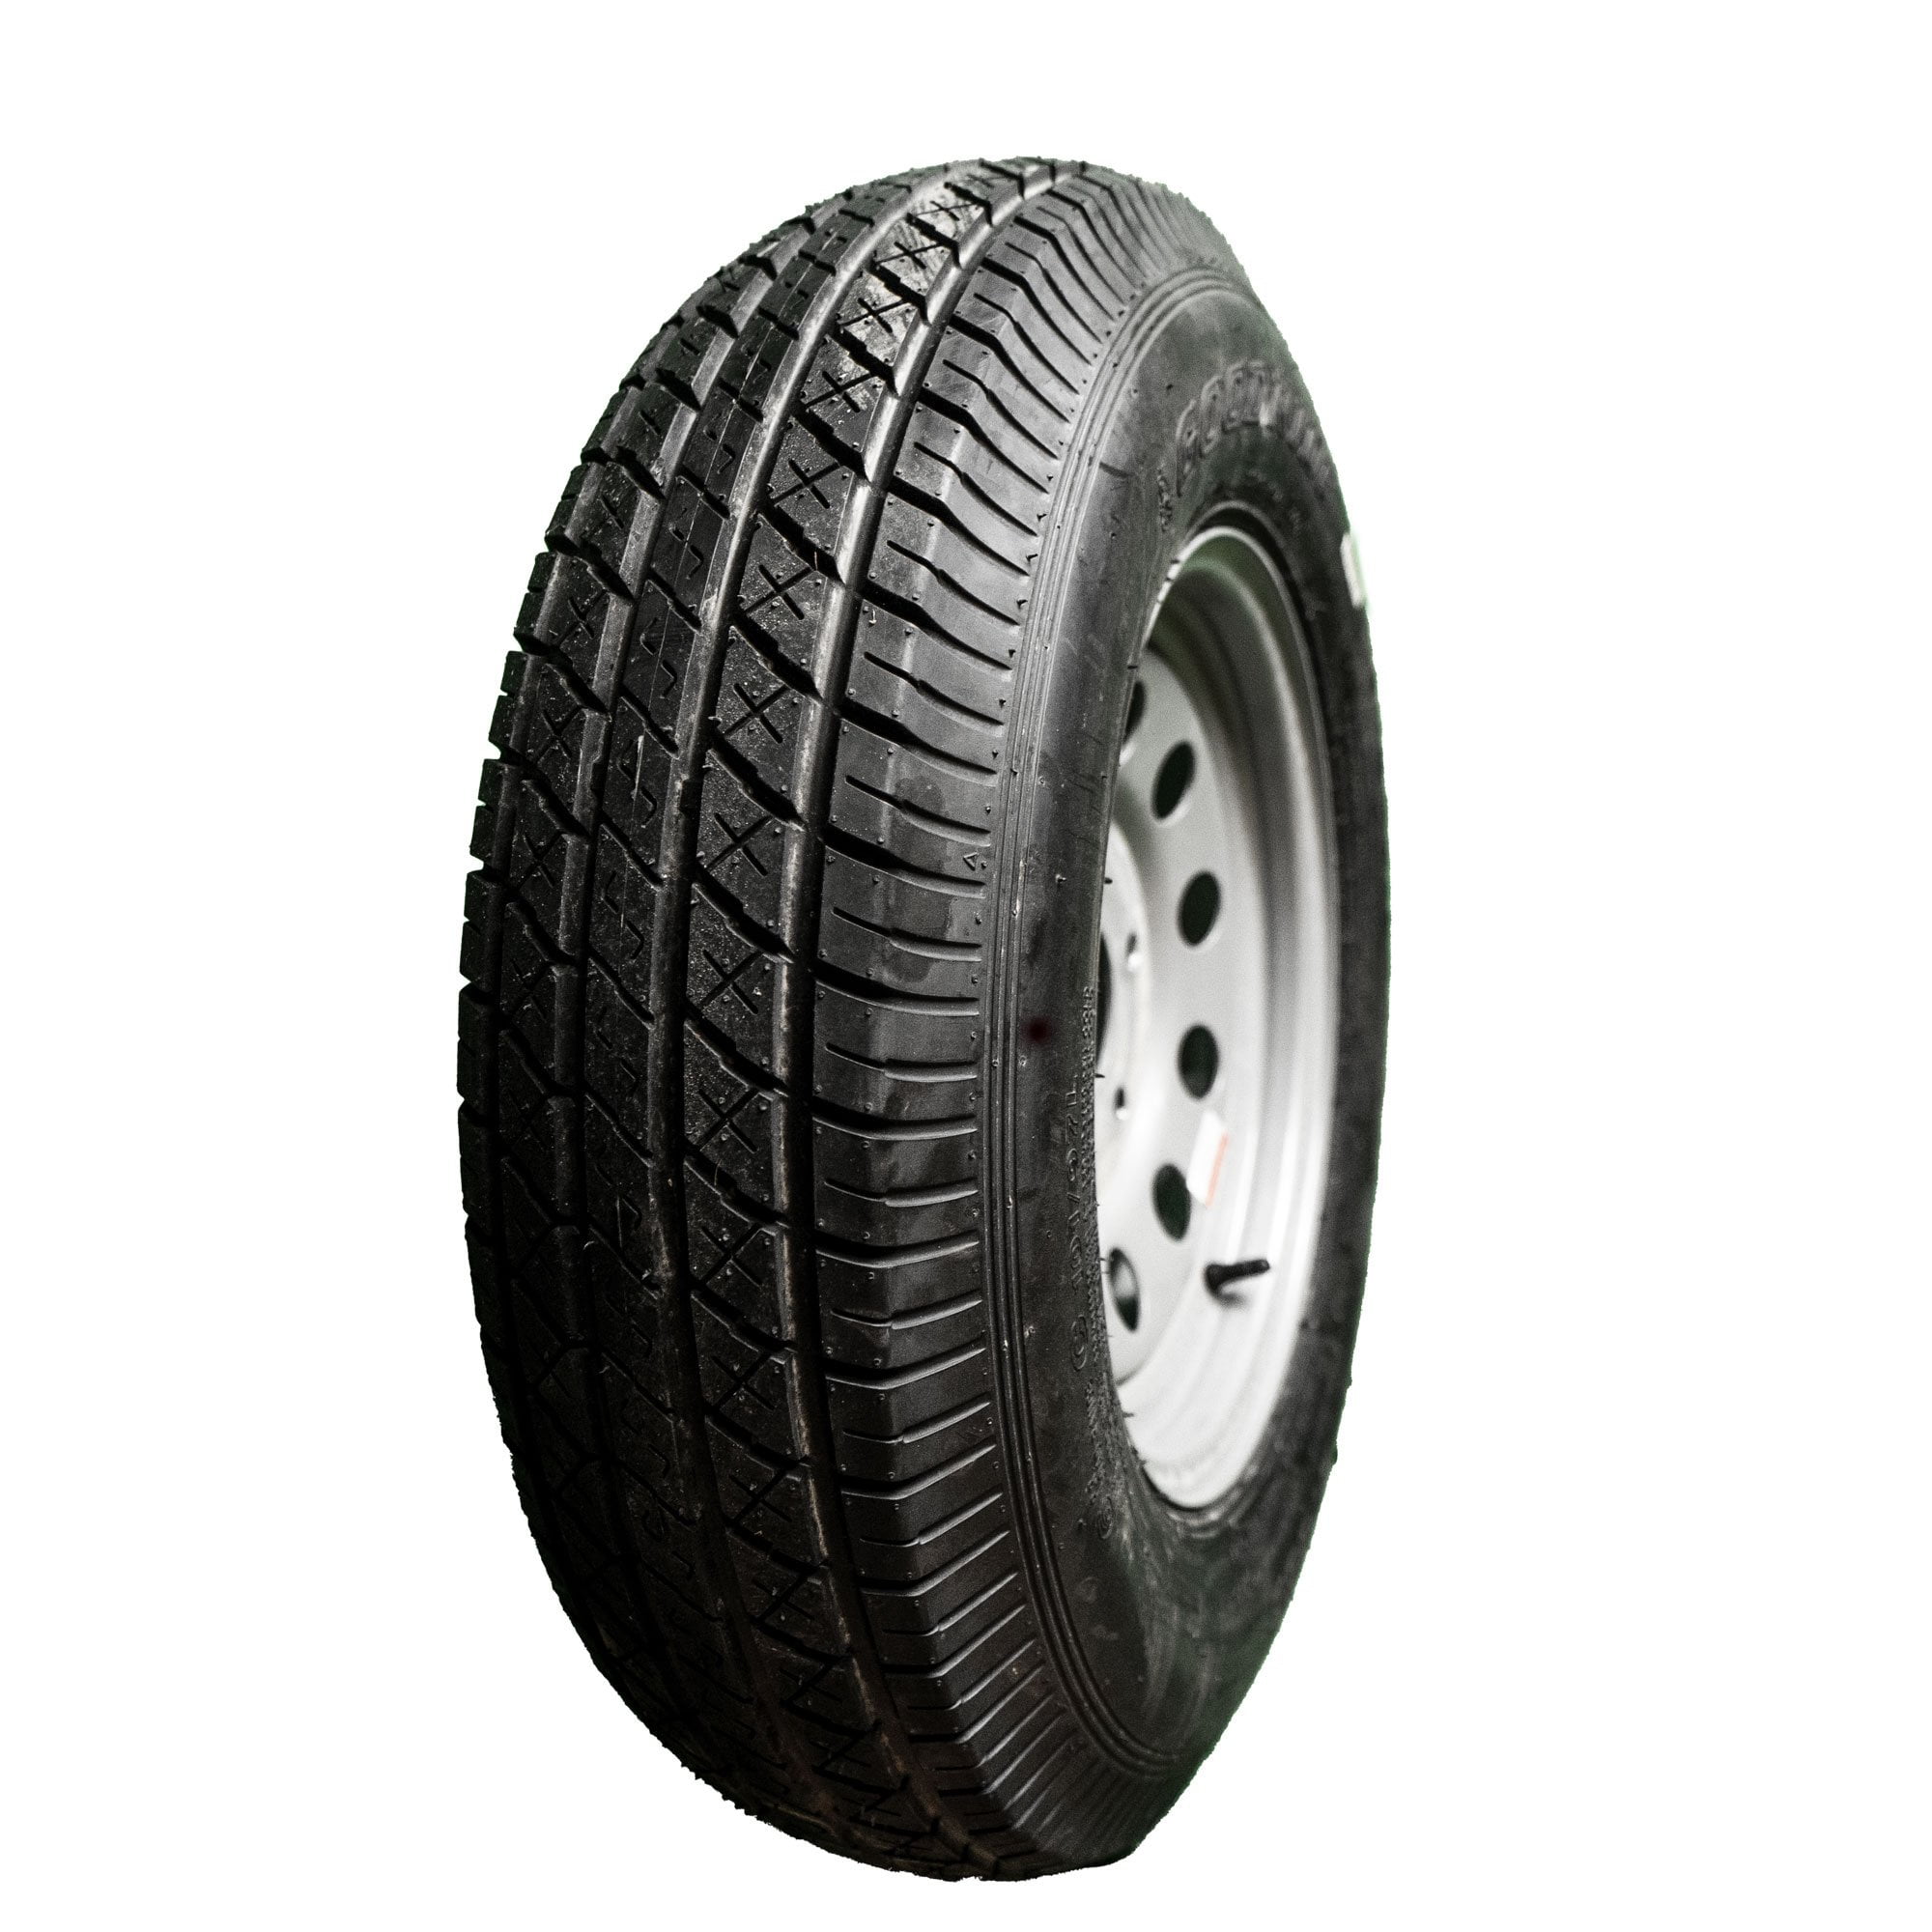 Tw Goodride ST205/75D15 6 Ply Bias Trailer Wheel/Tire Assembly Black MOD 5-4.5 Bolt Pattern 5 Lug 